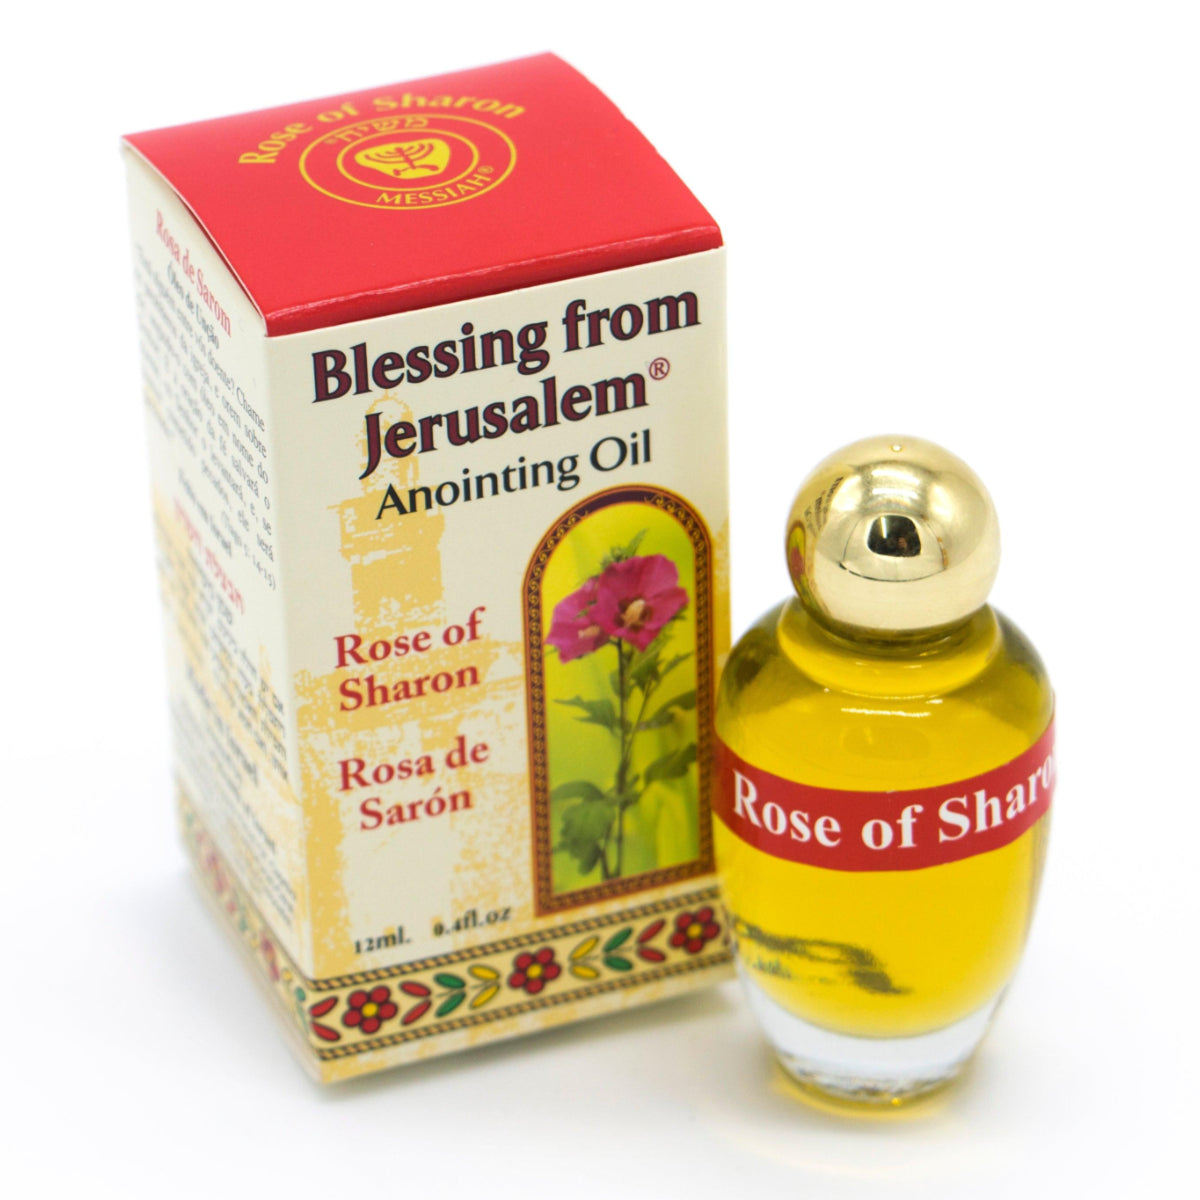 Rose of Sharon Anointing Oil 12 ml - 0.4 oz from Holyland Jerusalem